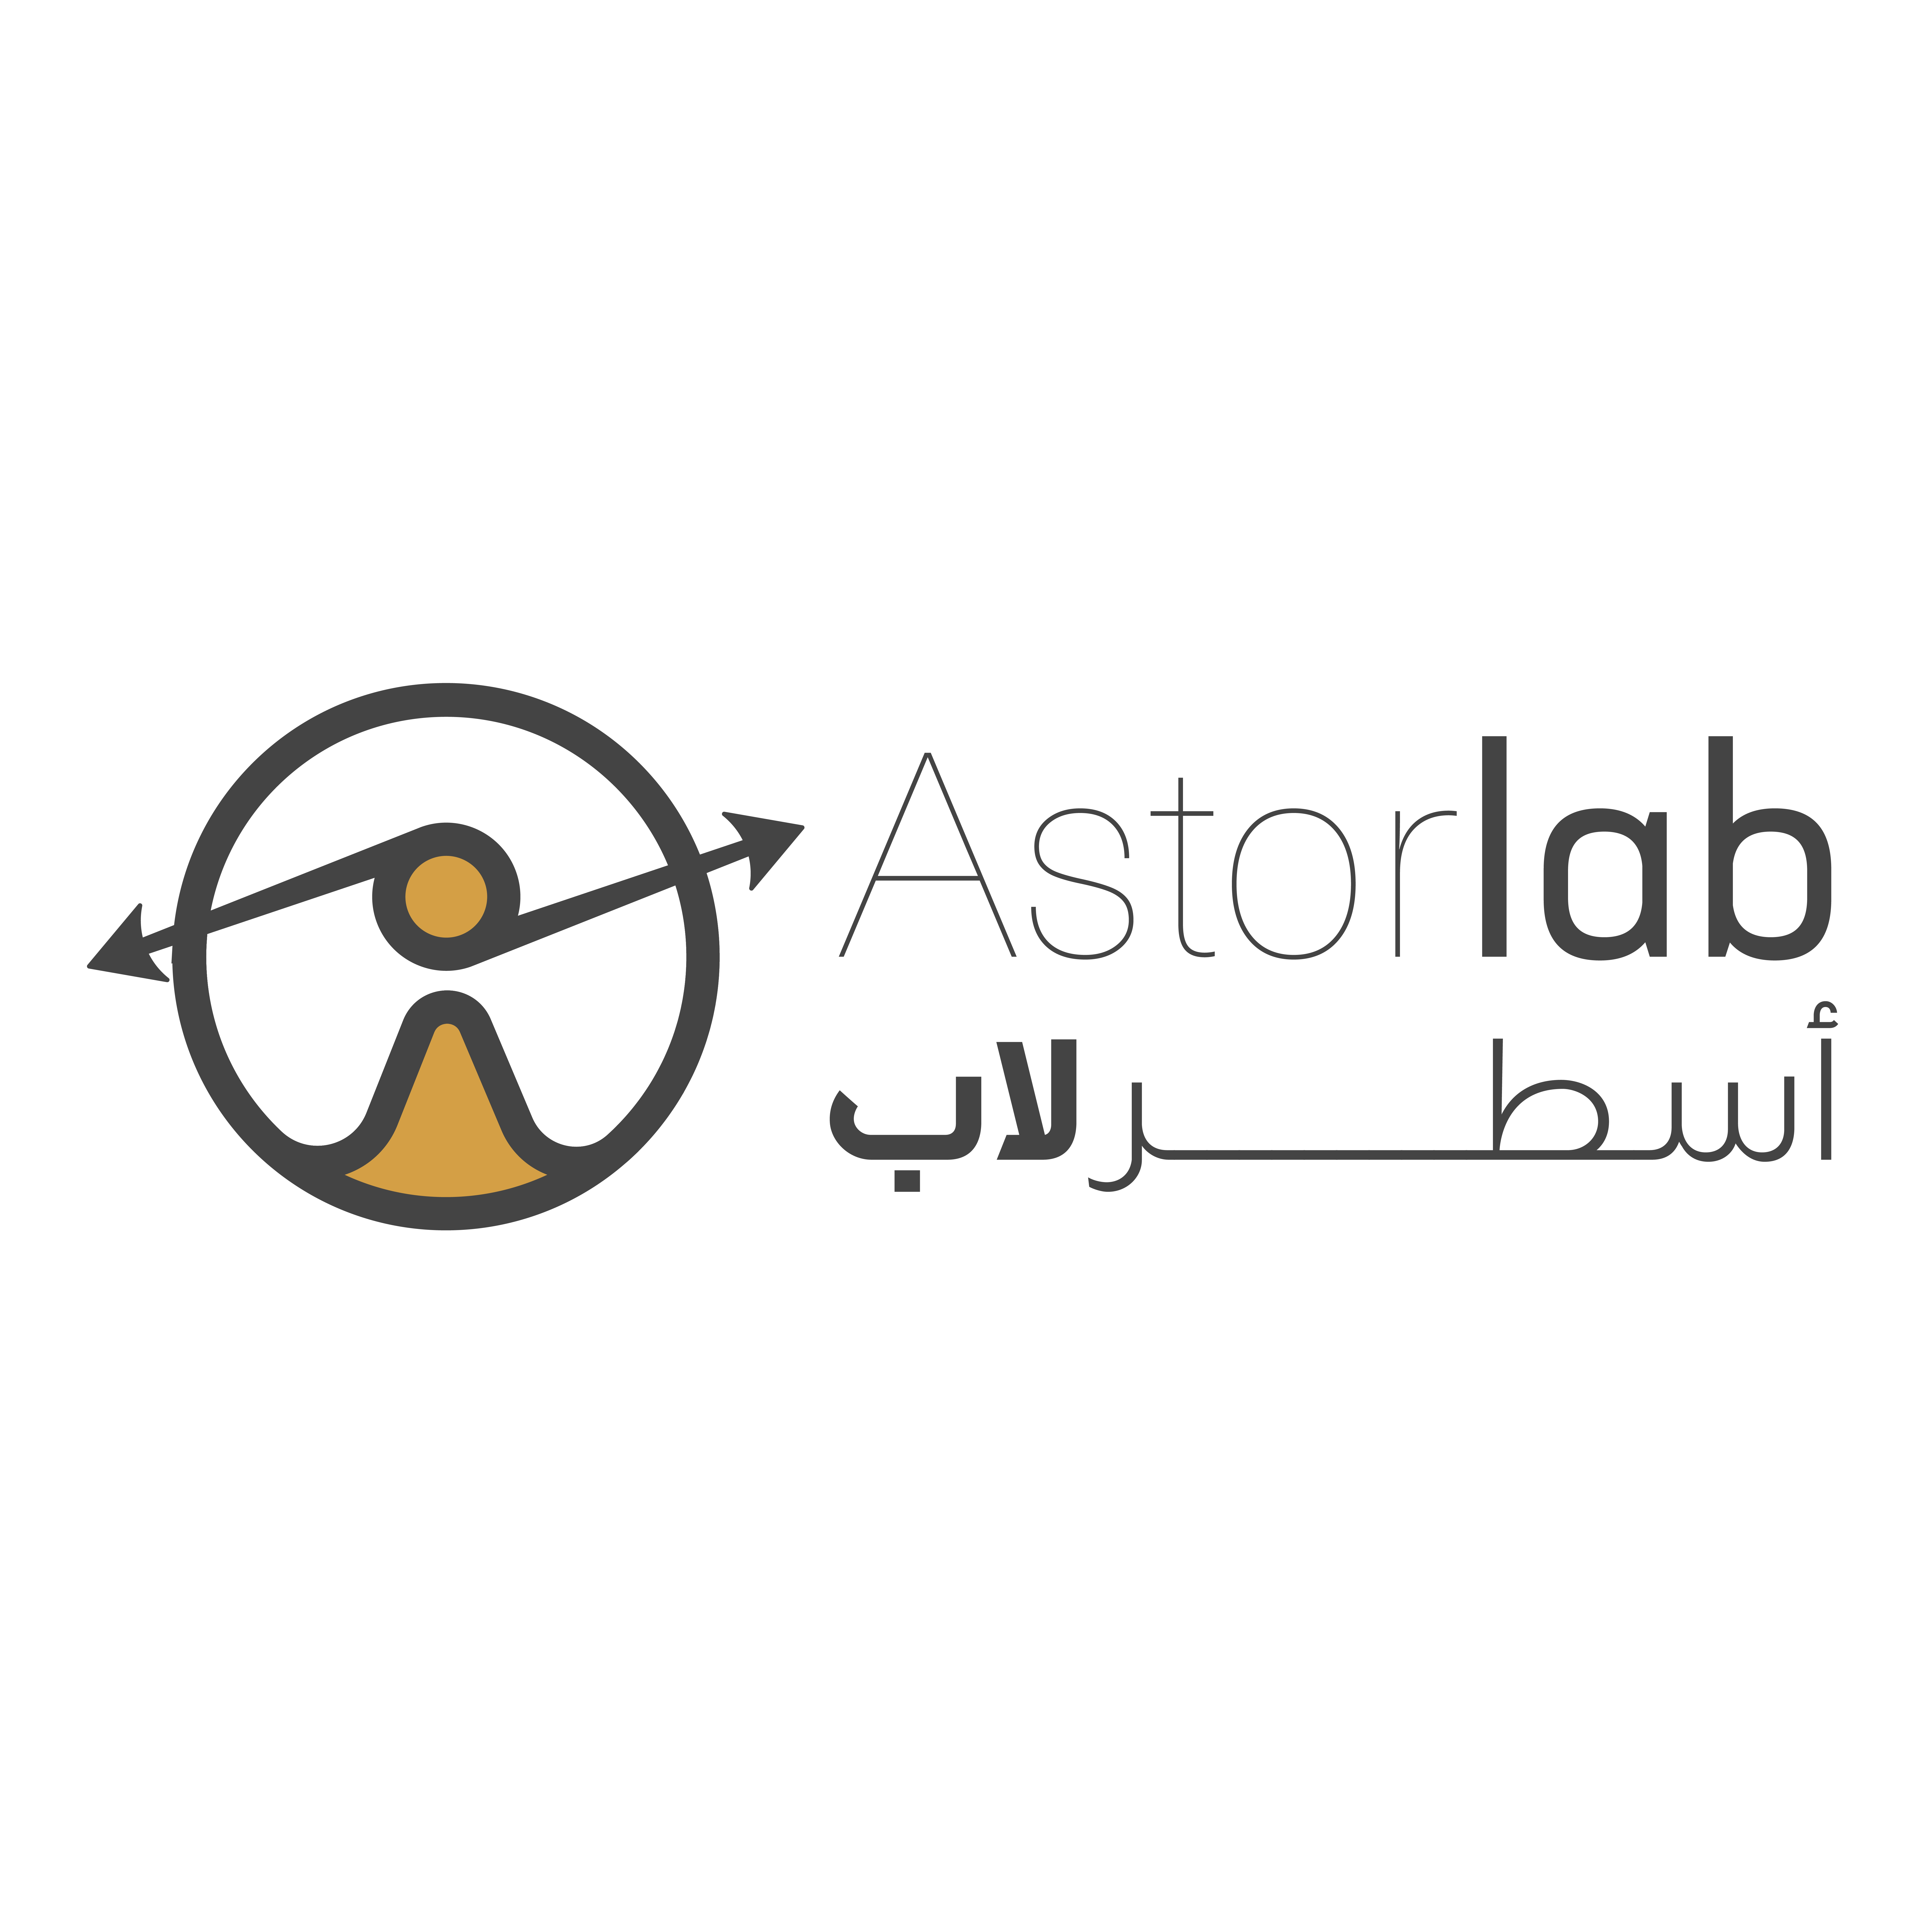 Astorlab